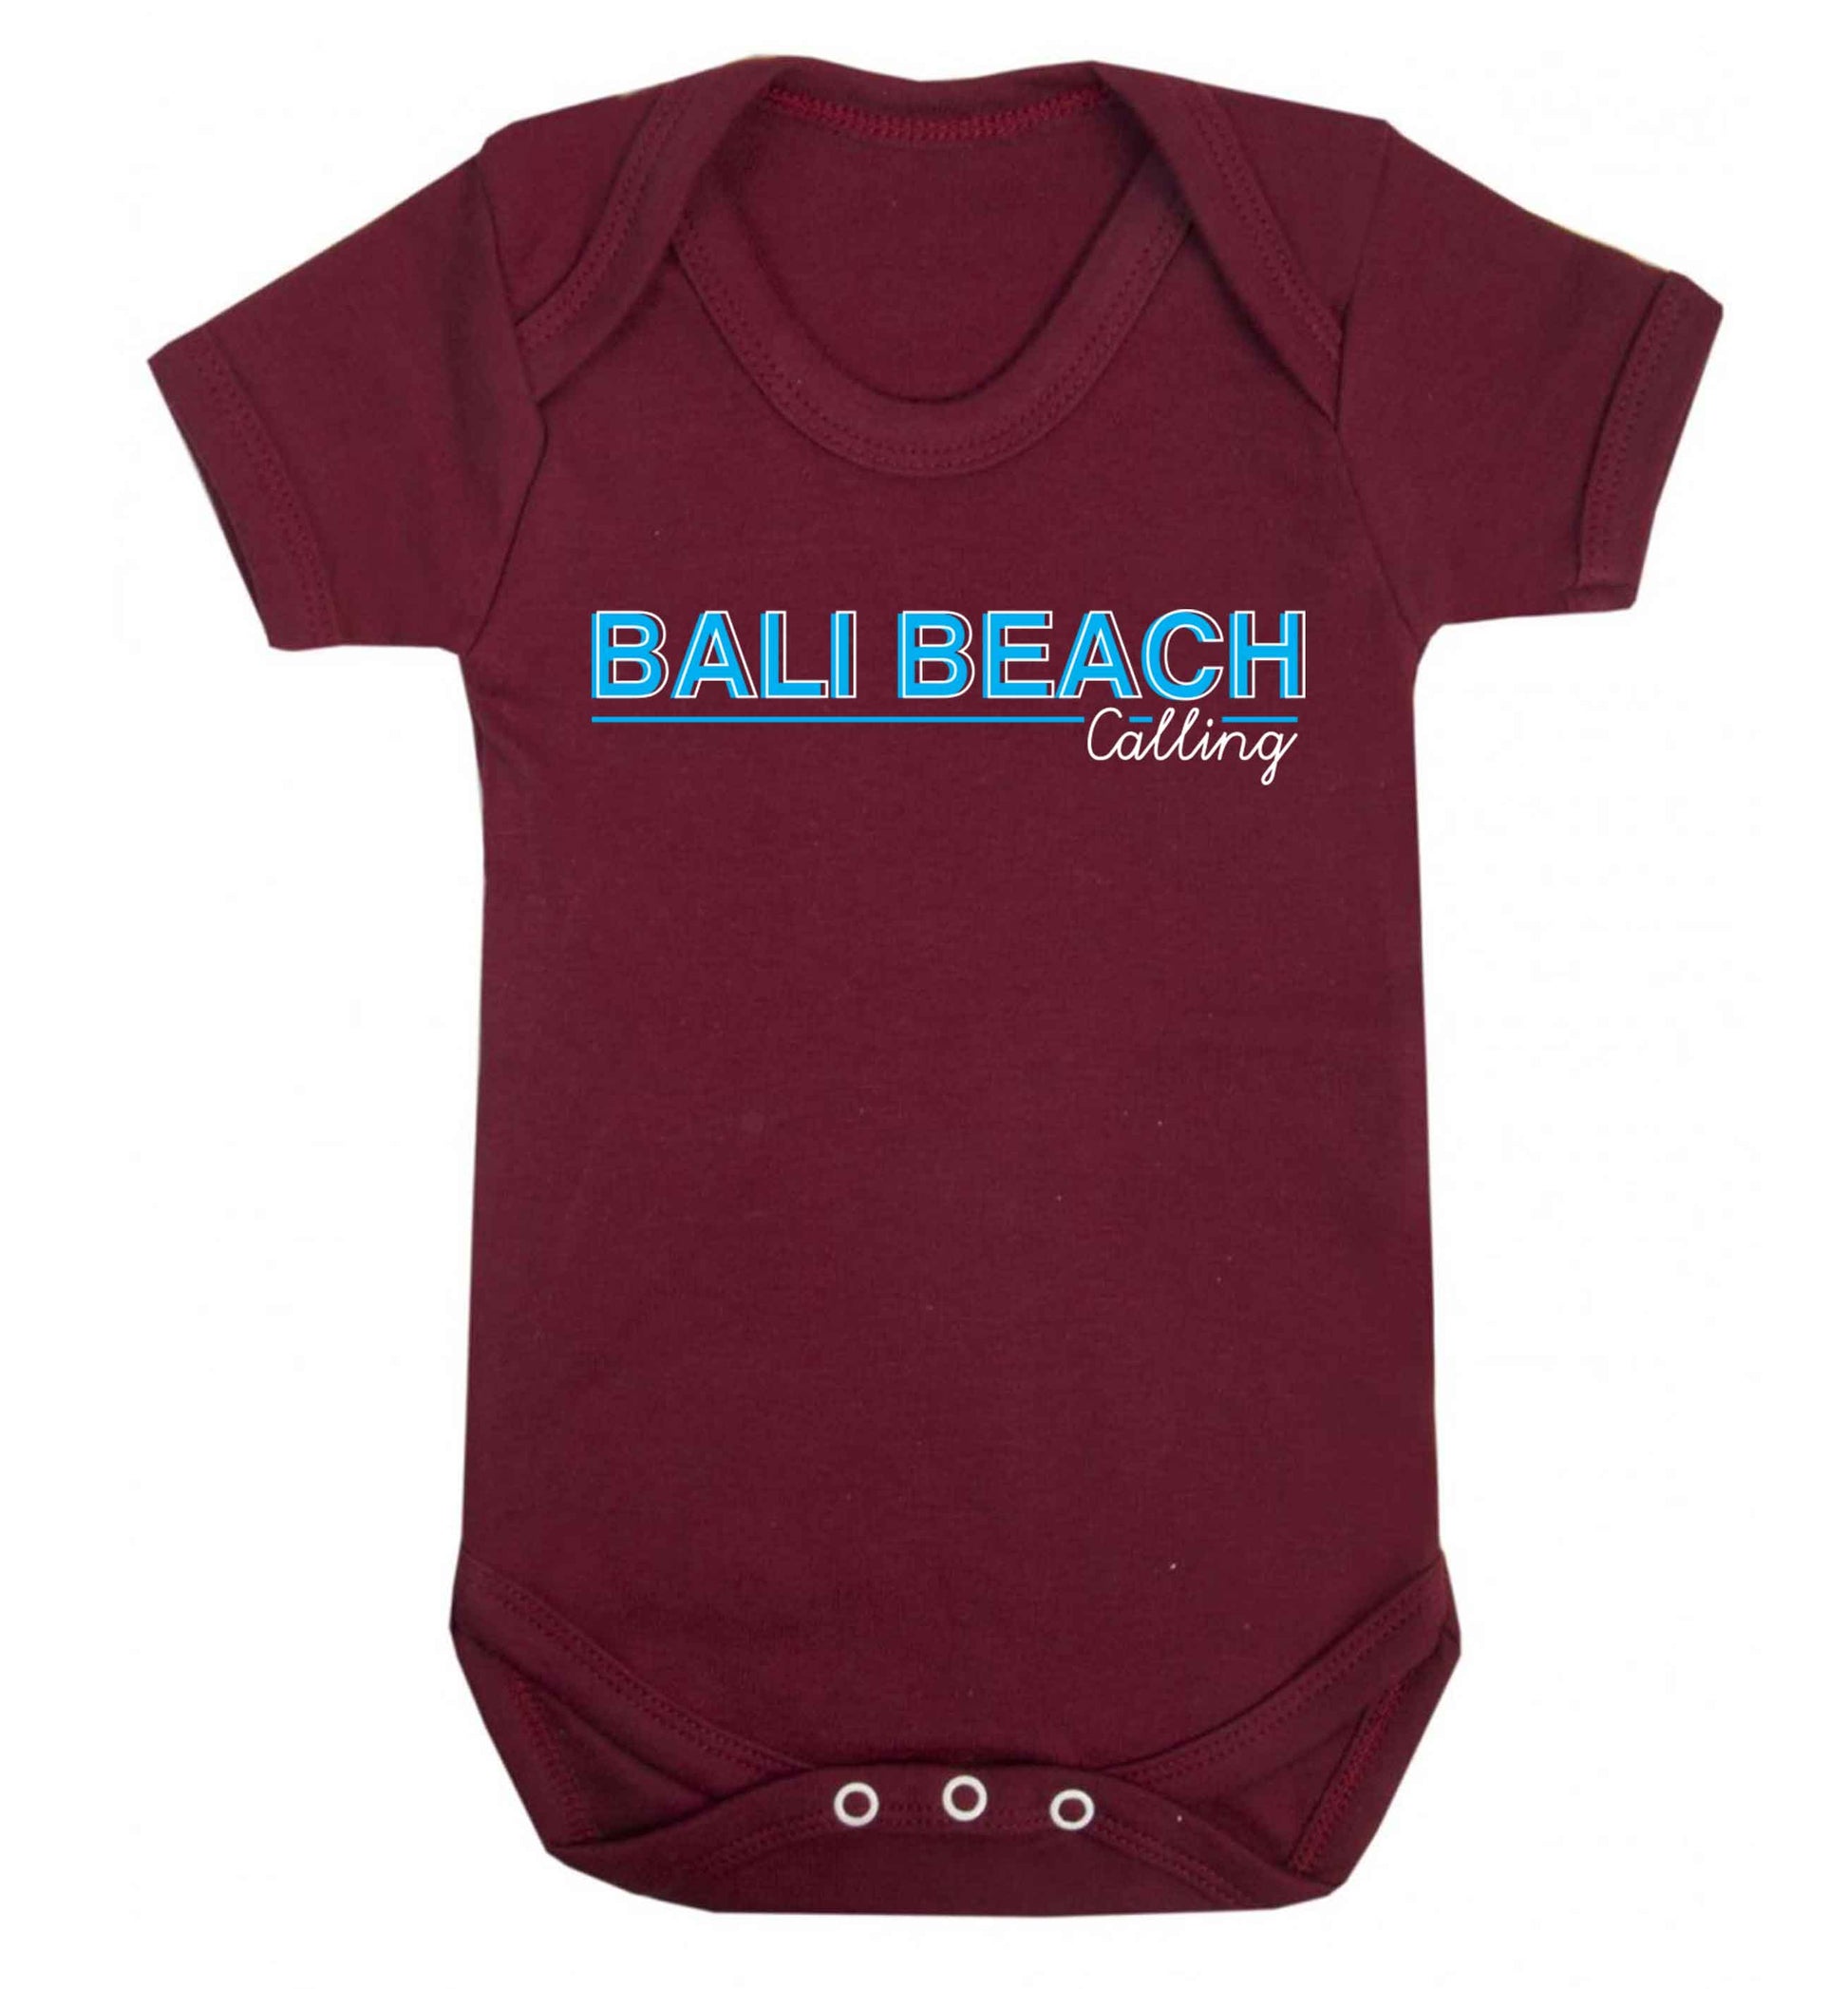 Bali beach calling Baby Vest maroon 18-24 months